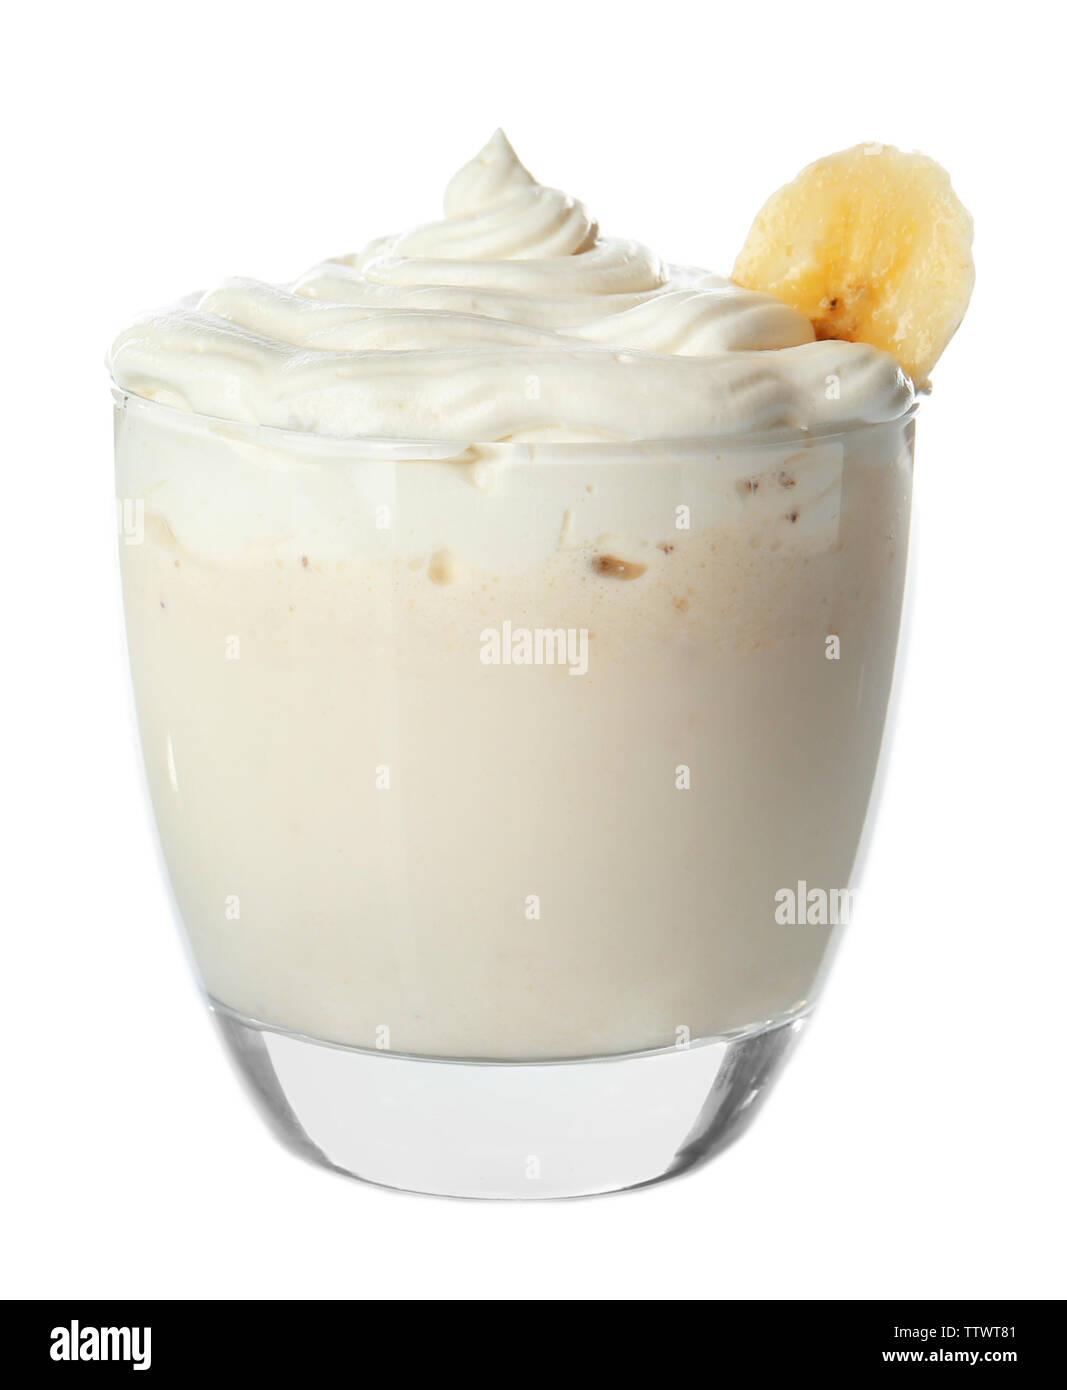 https://c8.alamy.com/comp/TTWT81/milk-shake-with-banana-slice-on-white-background-TTWT81.jpg